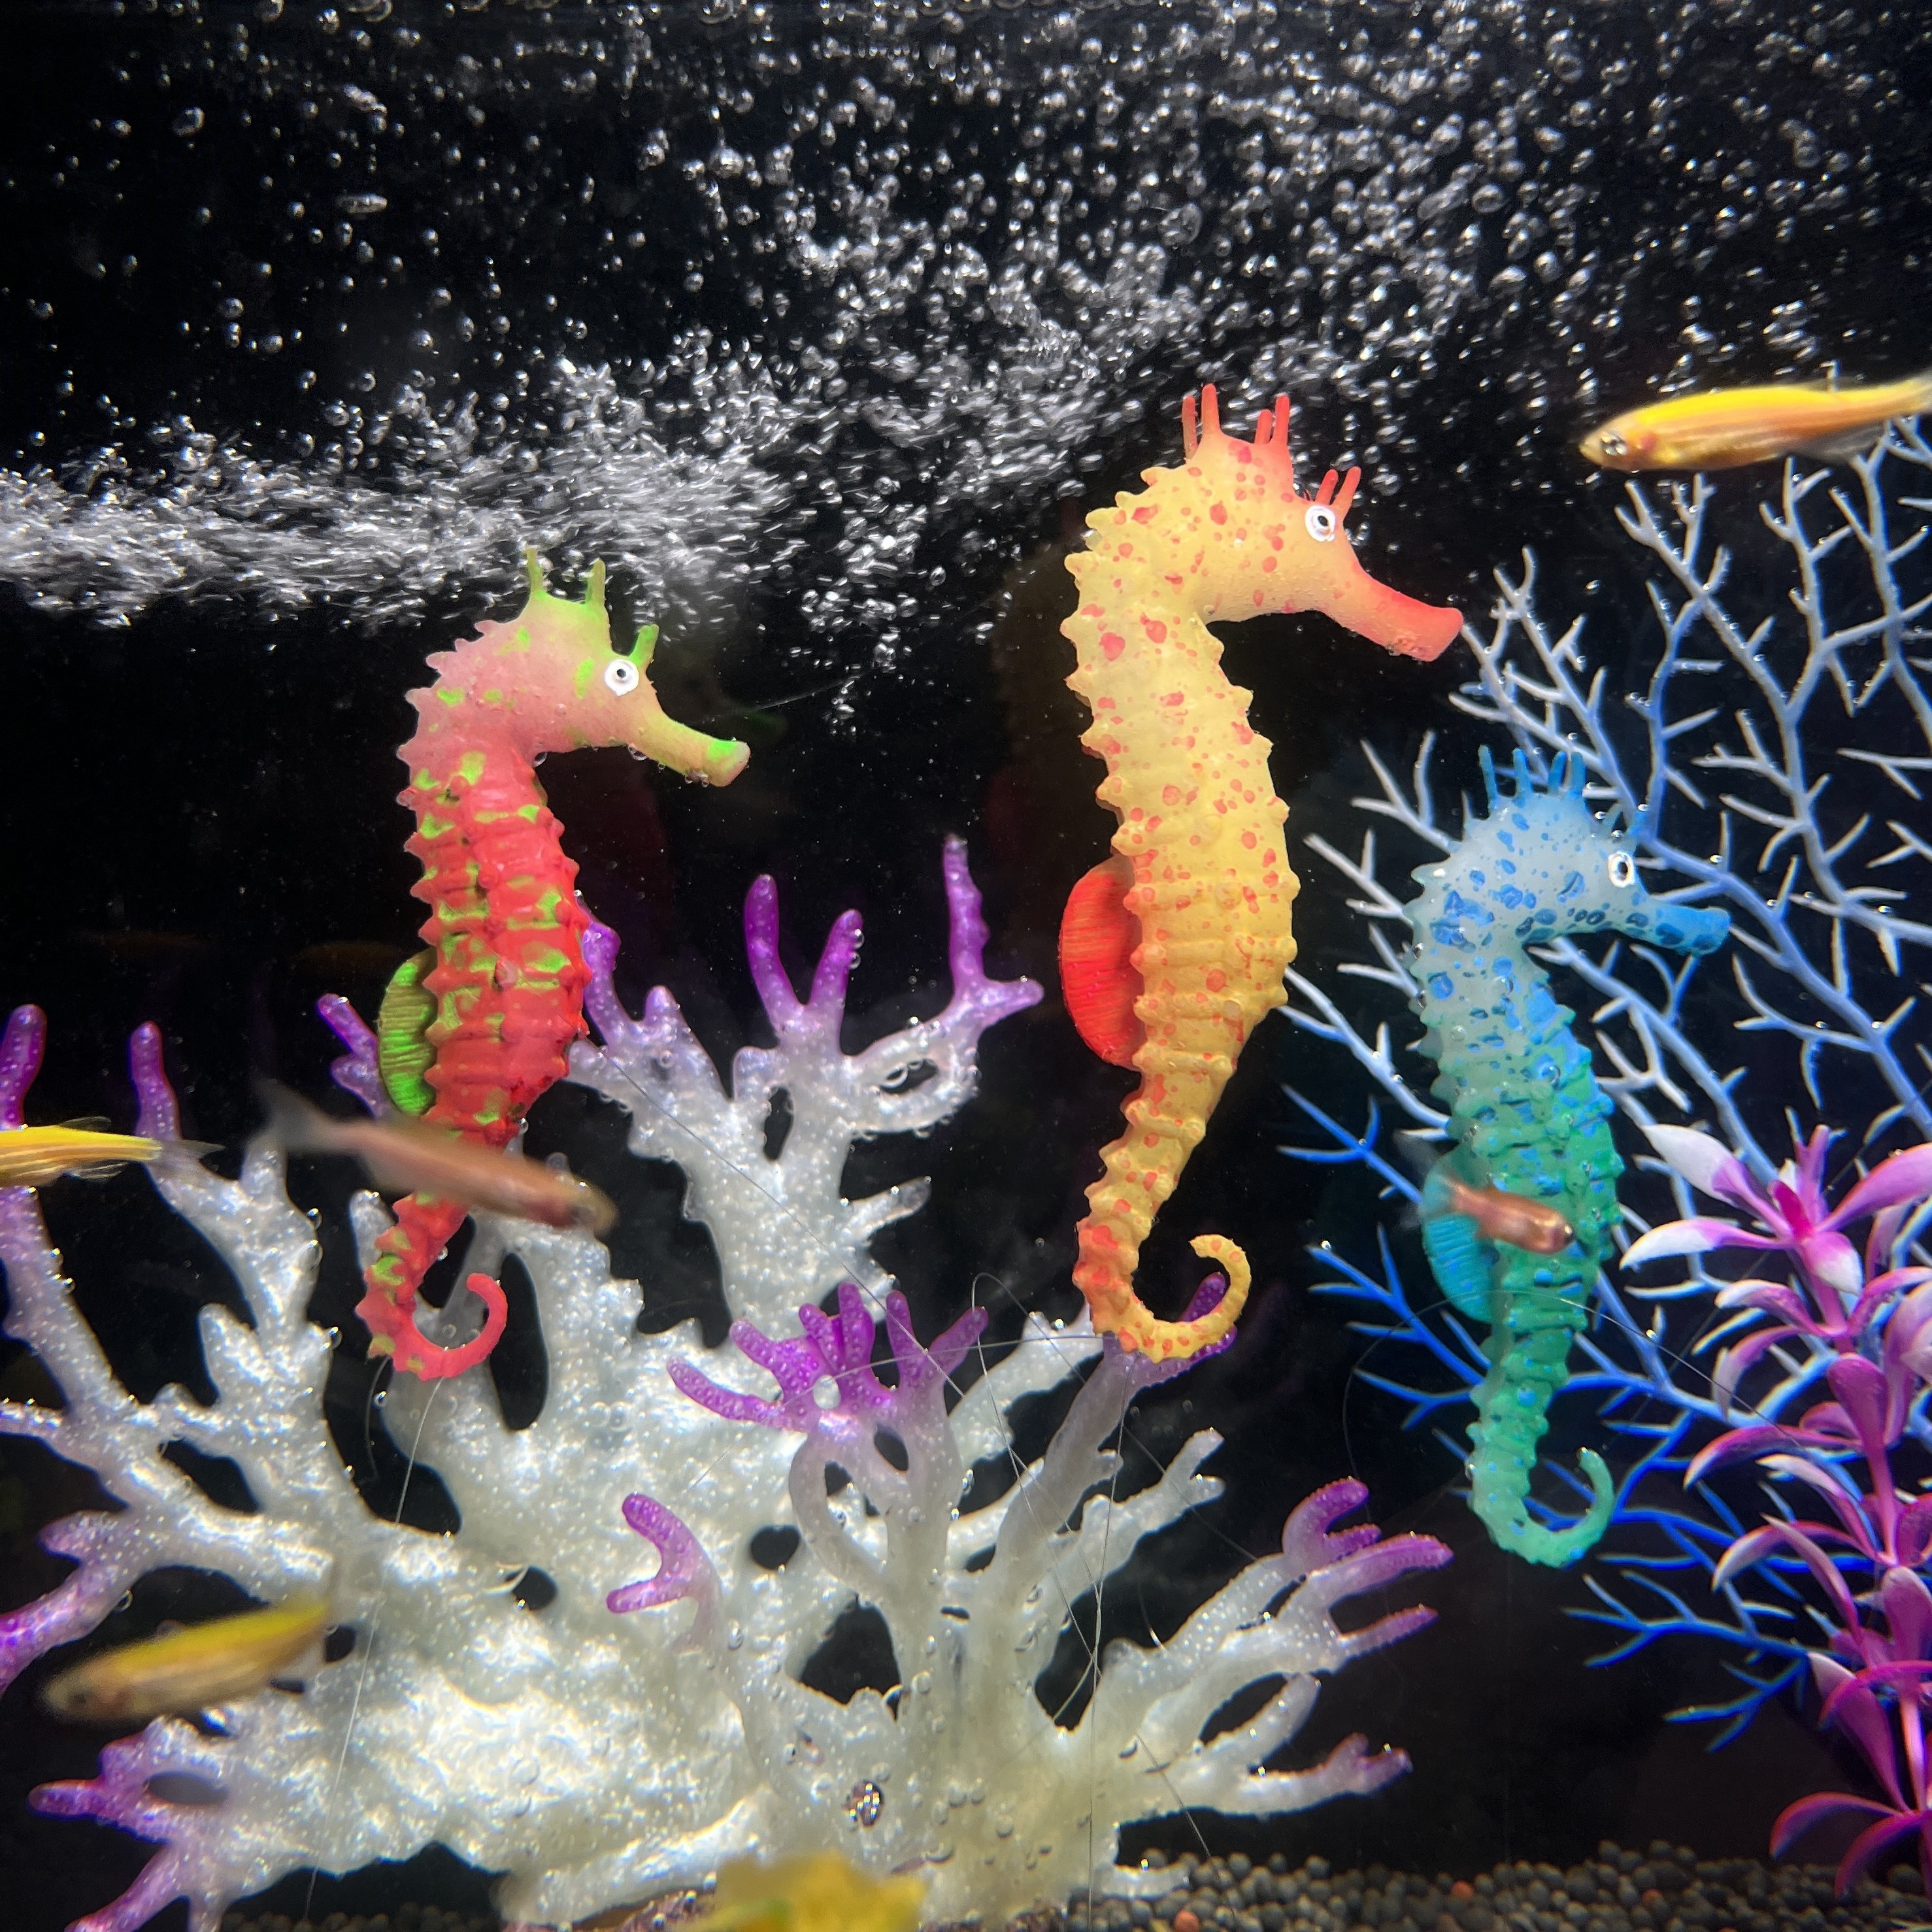 

3pcs Glow In The Dark Seahorses, Tpu Simulated Decor For Fish Aquariums - Fluorescent Silicone Seahorse Landscape Decoration For Fish Tank